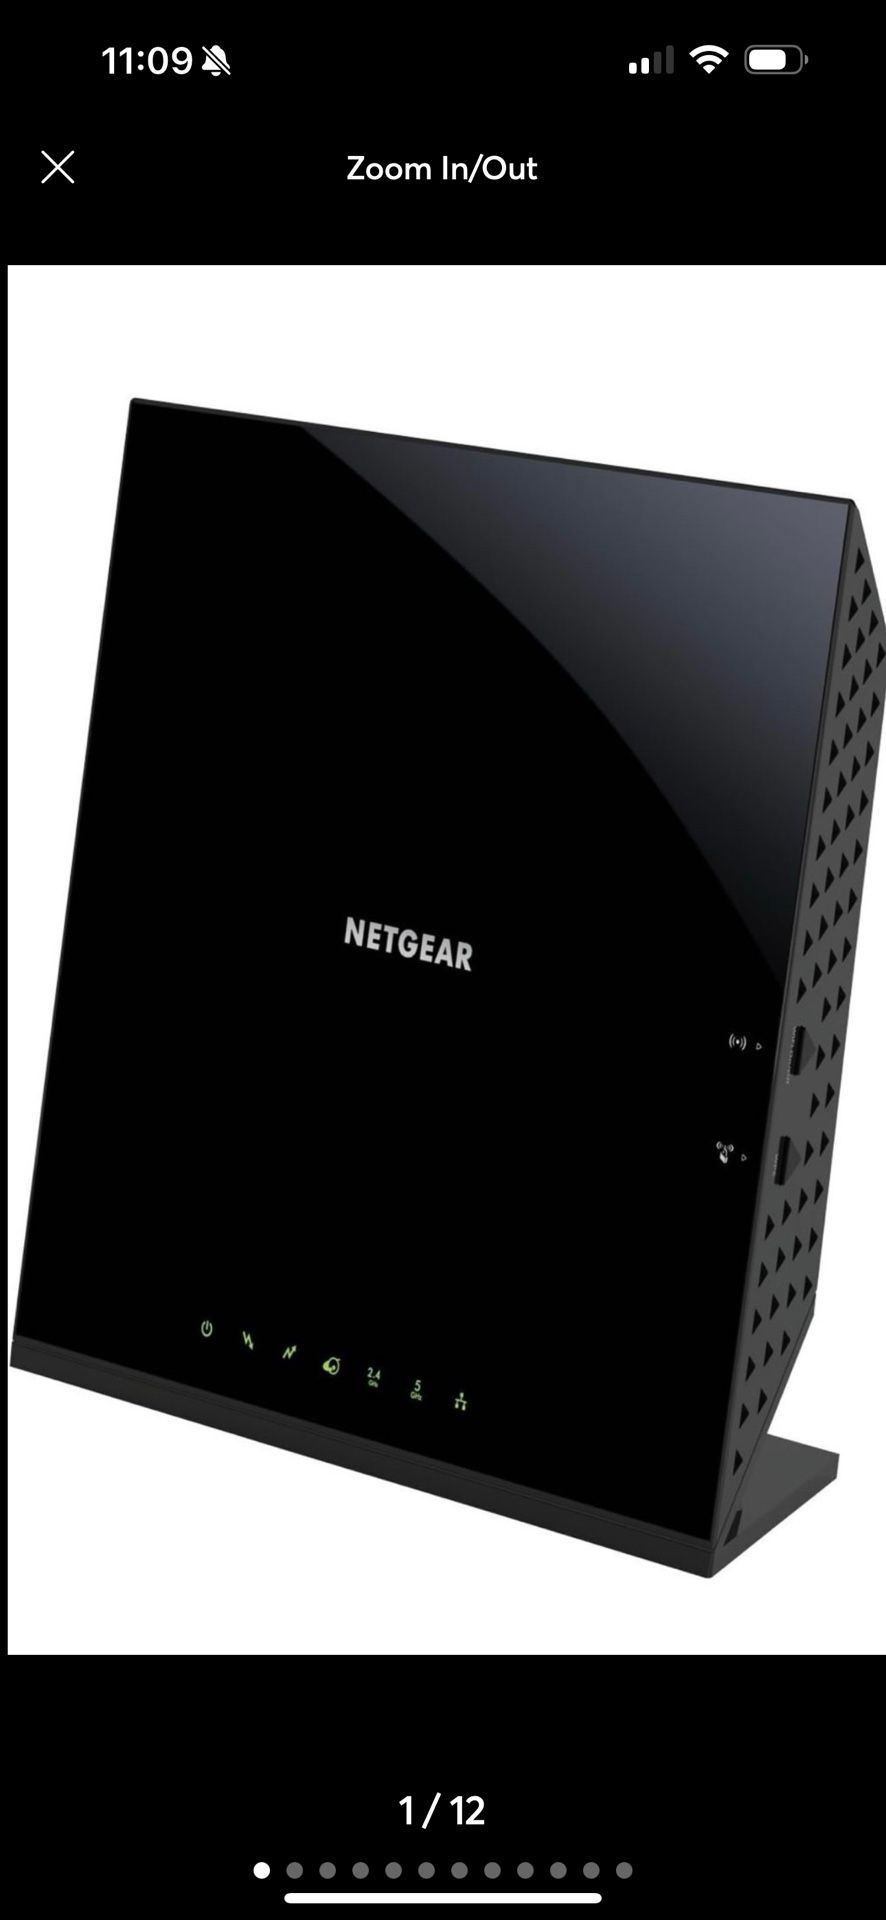 Netgear Modem with Built-in WiFi Router Model C6250